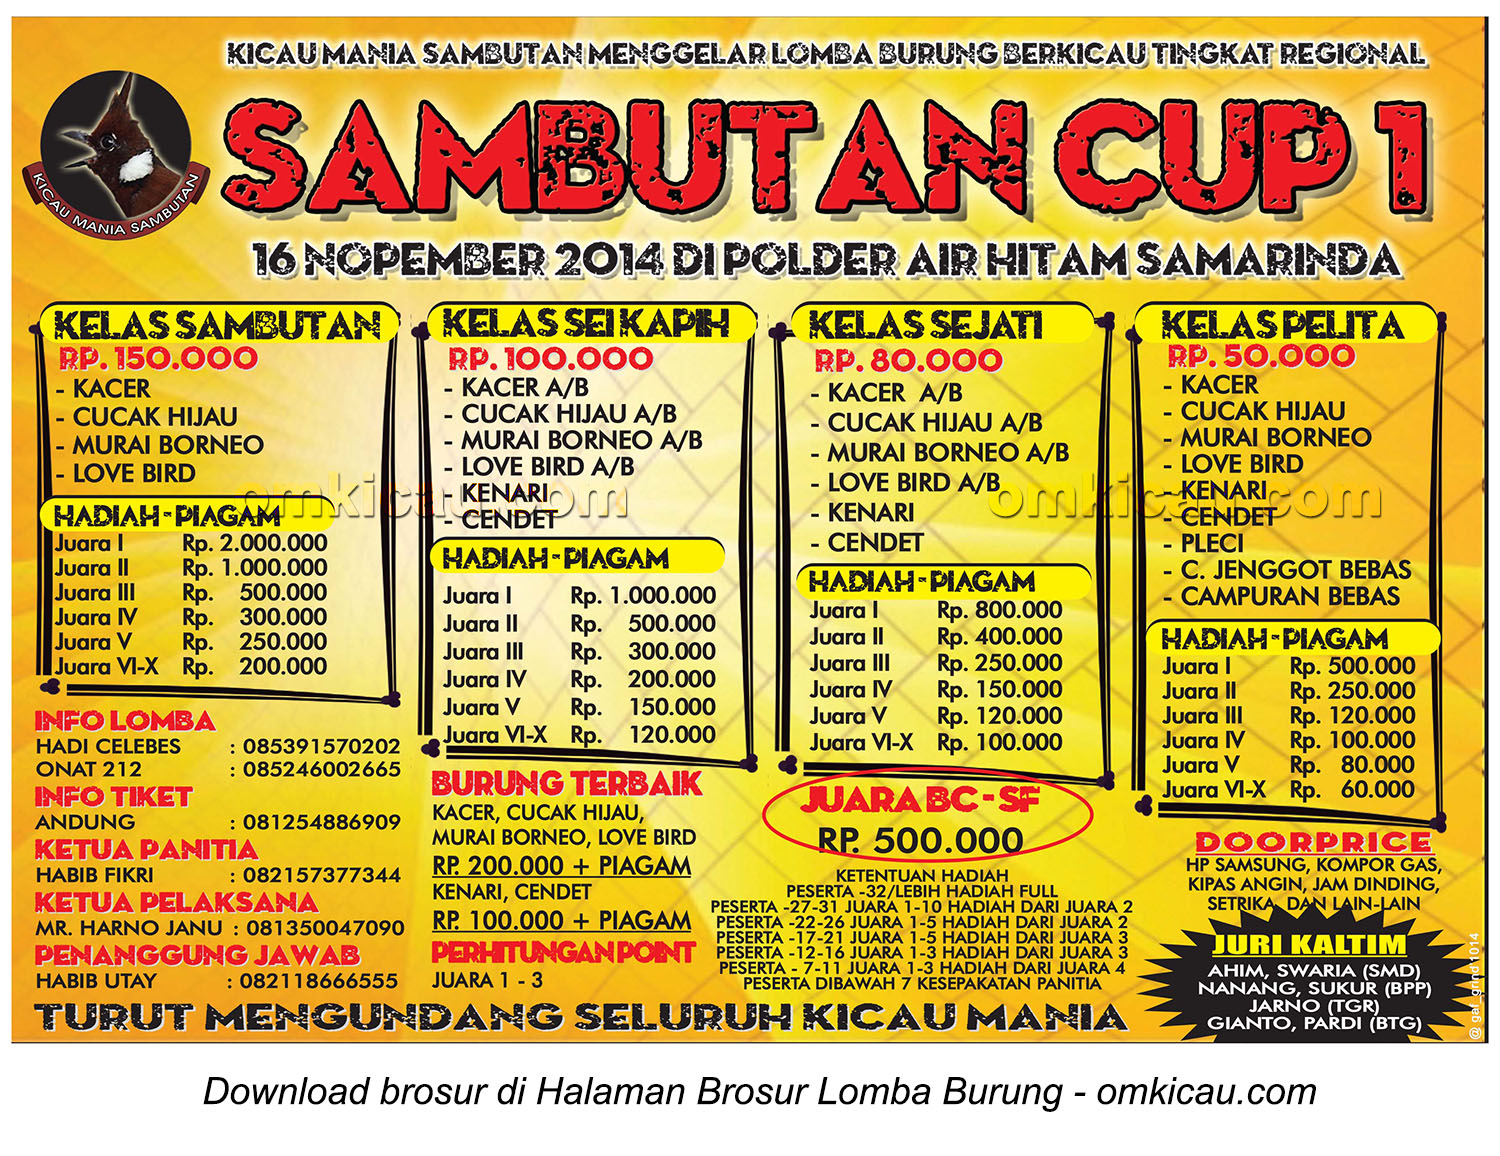 Brosur Lomba Burung Berkicau Sambutan Cup 1, Samarinda, 16 November 2014